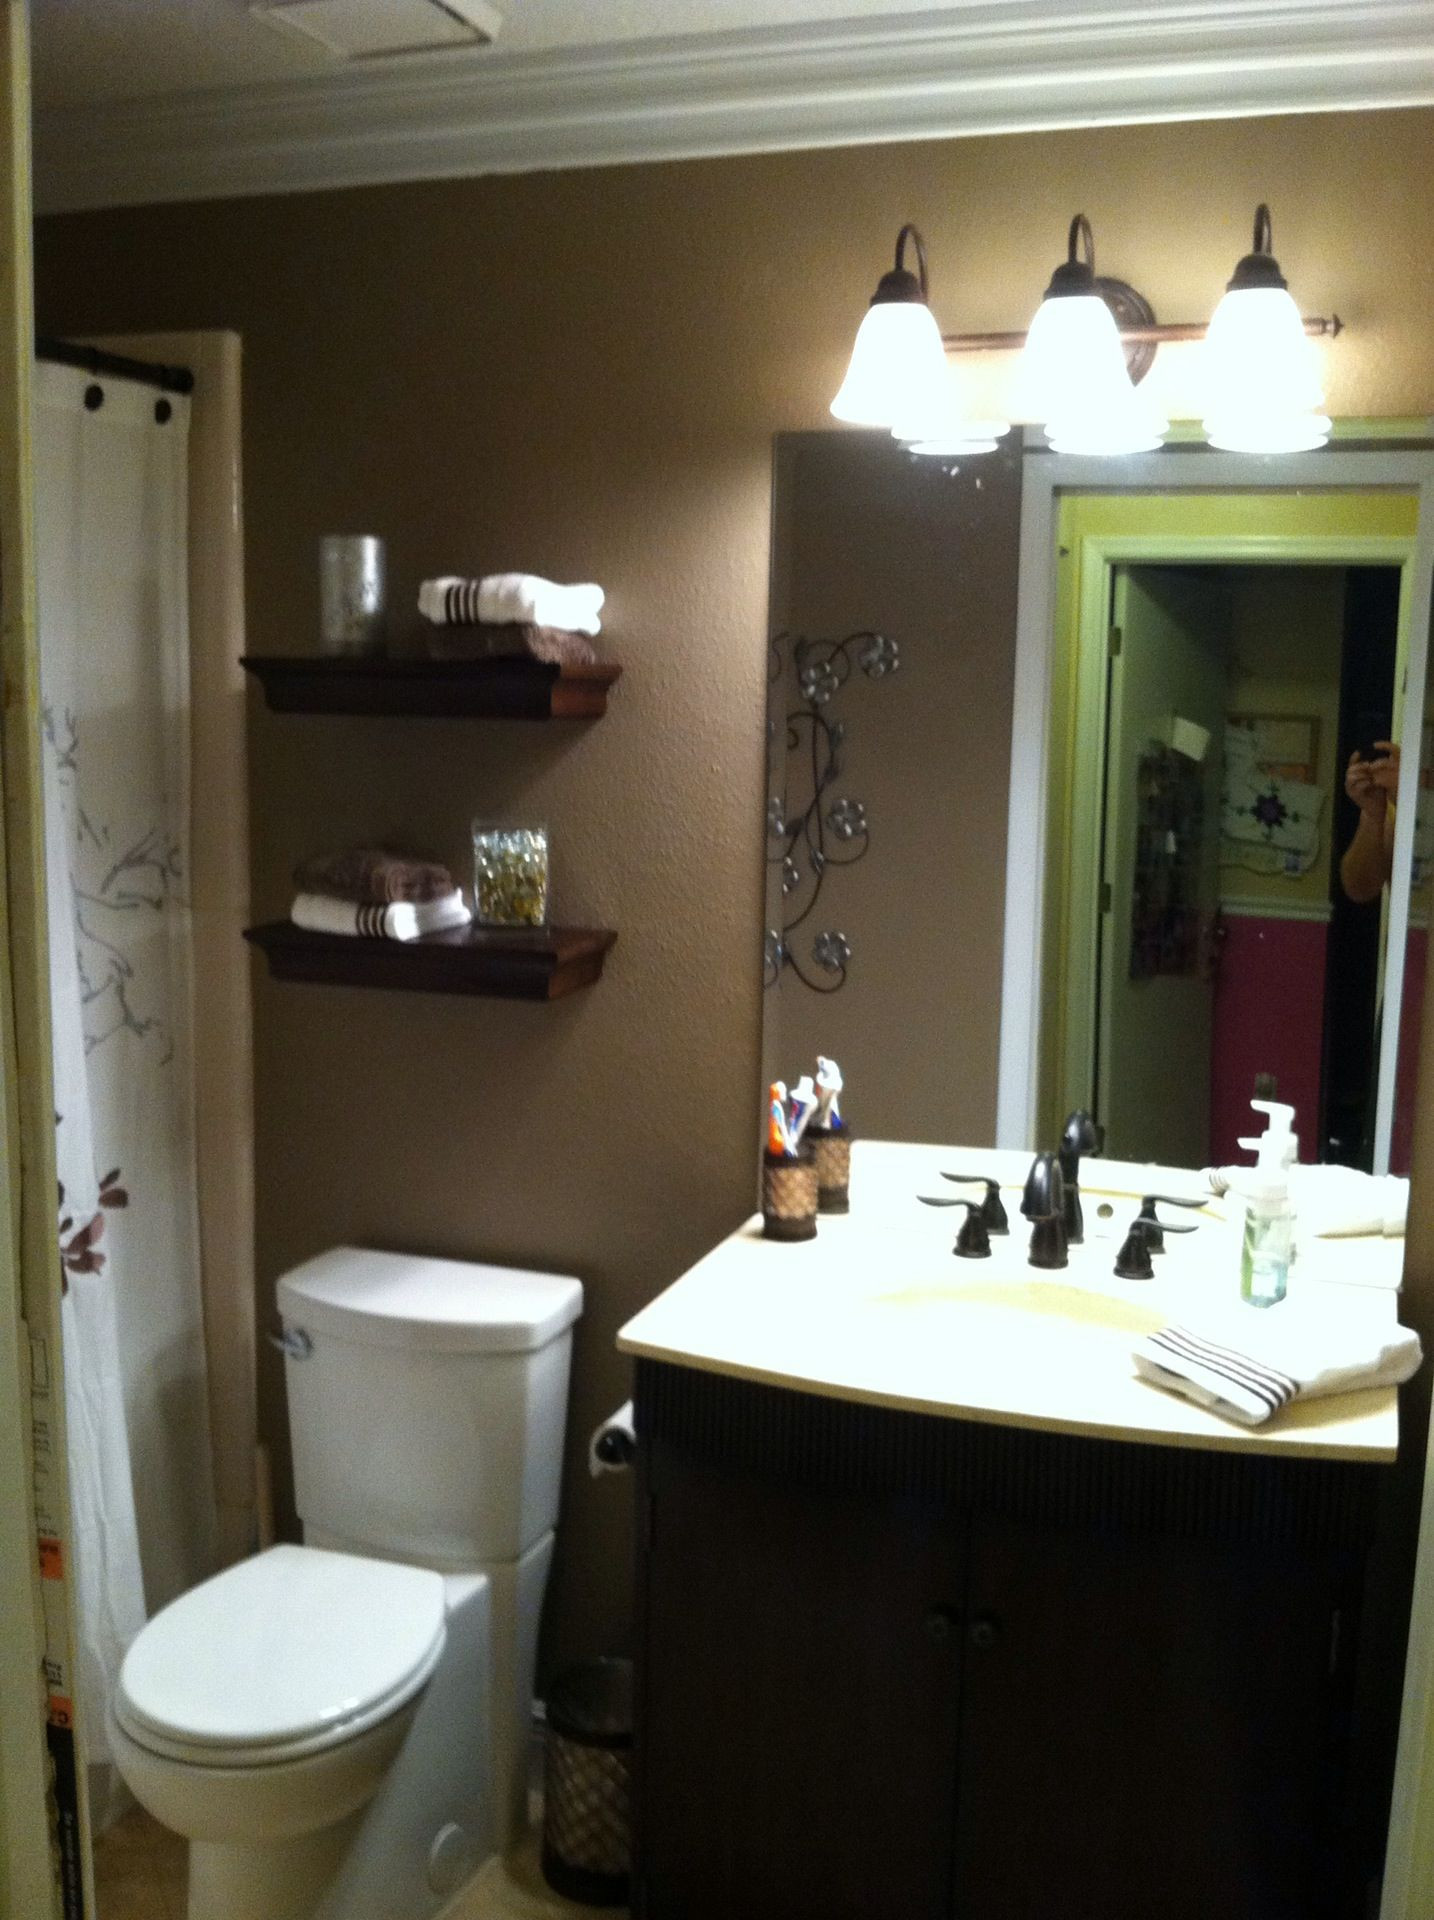 Best ideas about Pinterest Bathroom Remodel
. Save or Pin small bathroom remodel ideas Bathroom Ideas Pinterest Now.